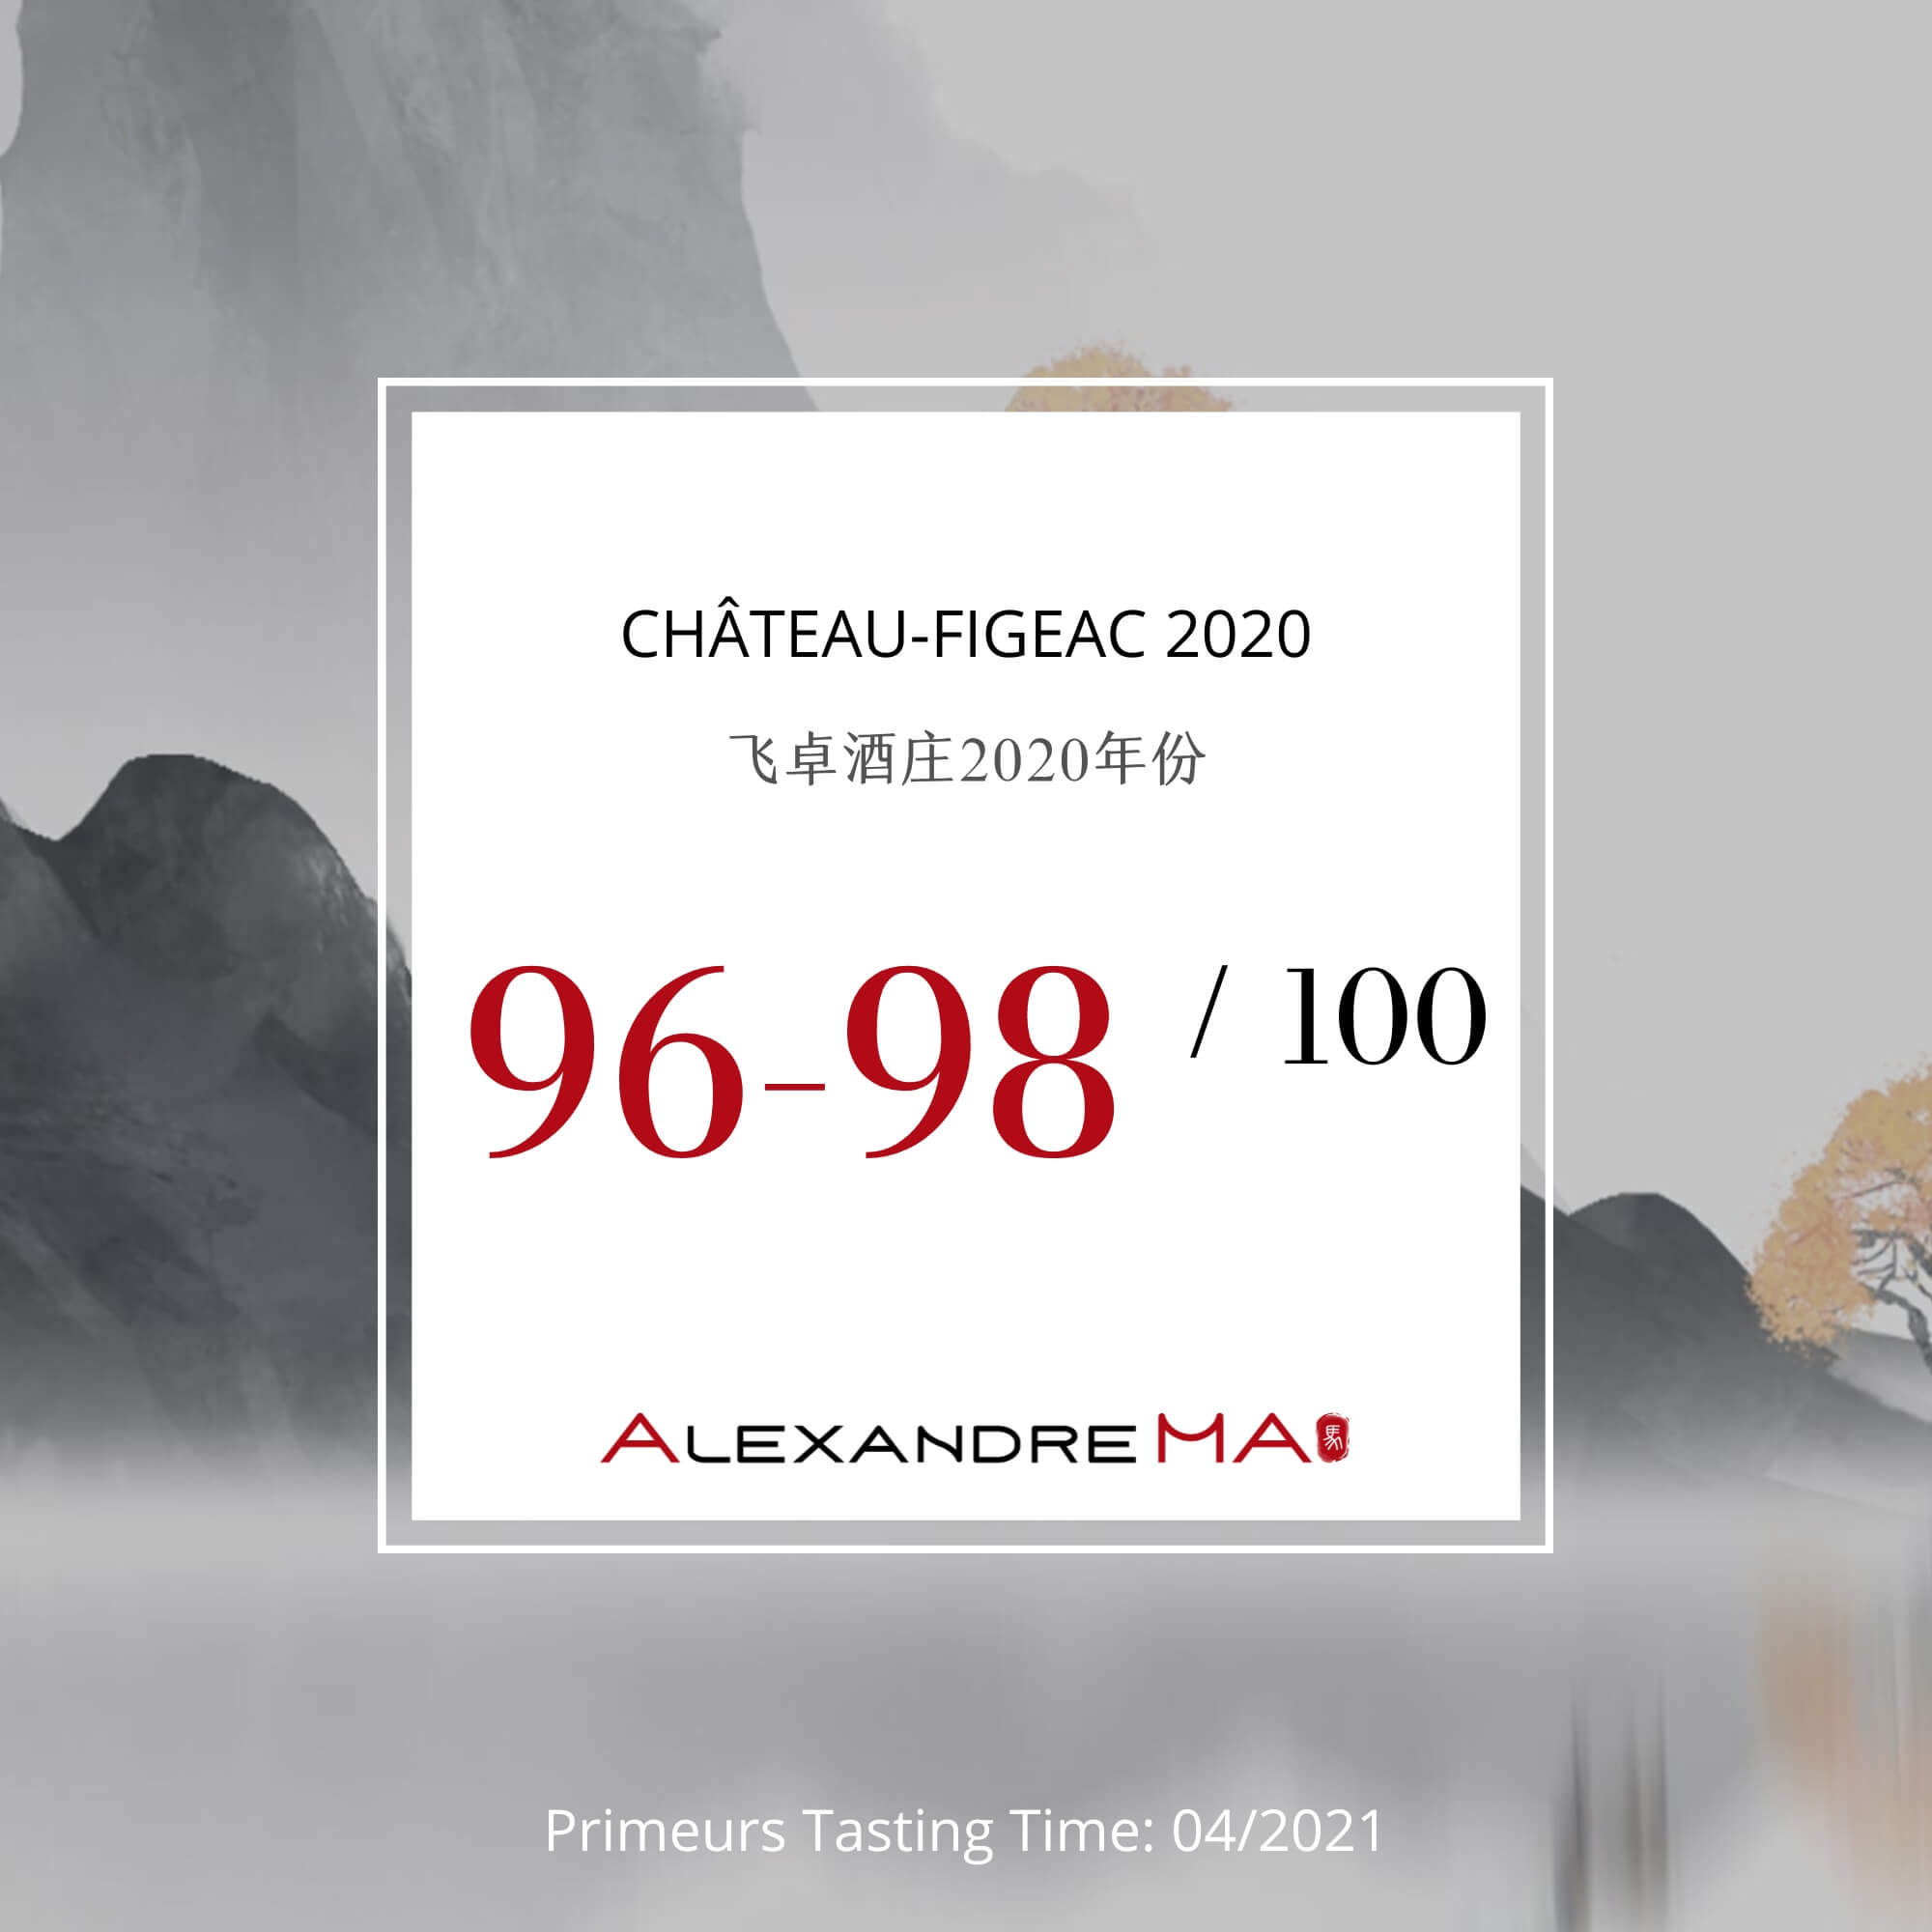 Château-Figeac 2020 - Alexandre MA